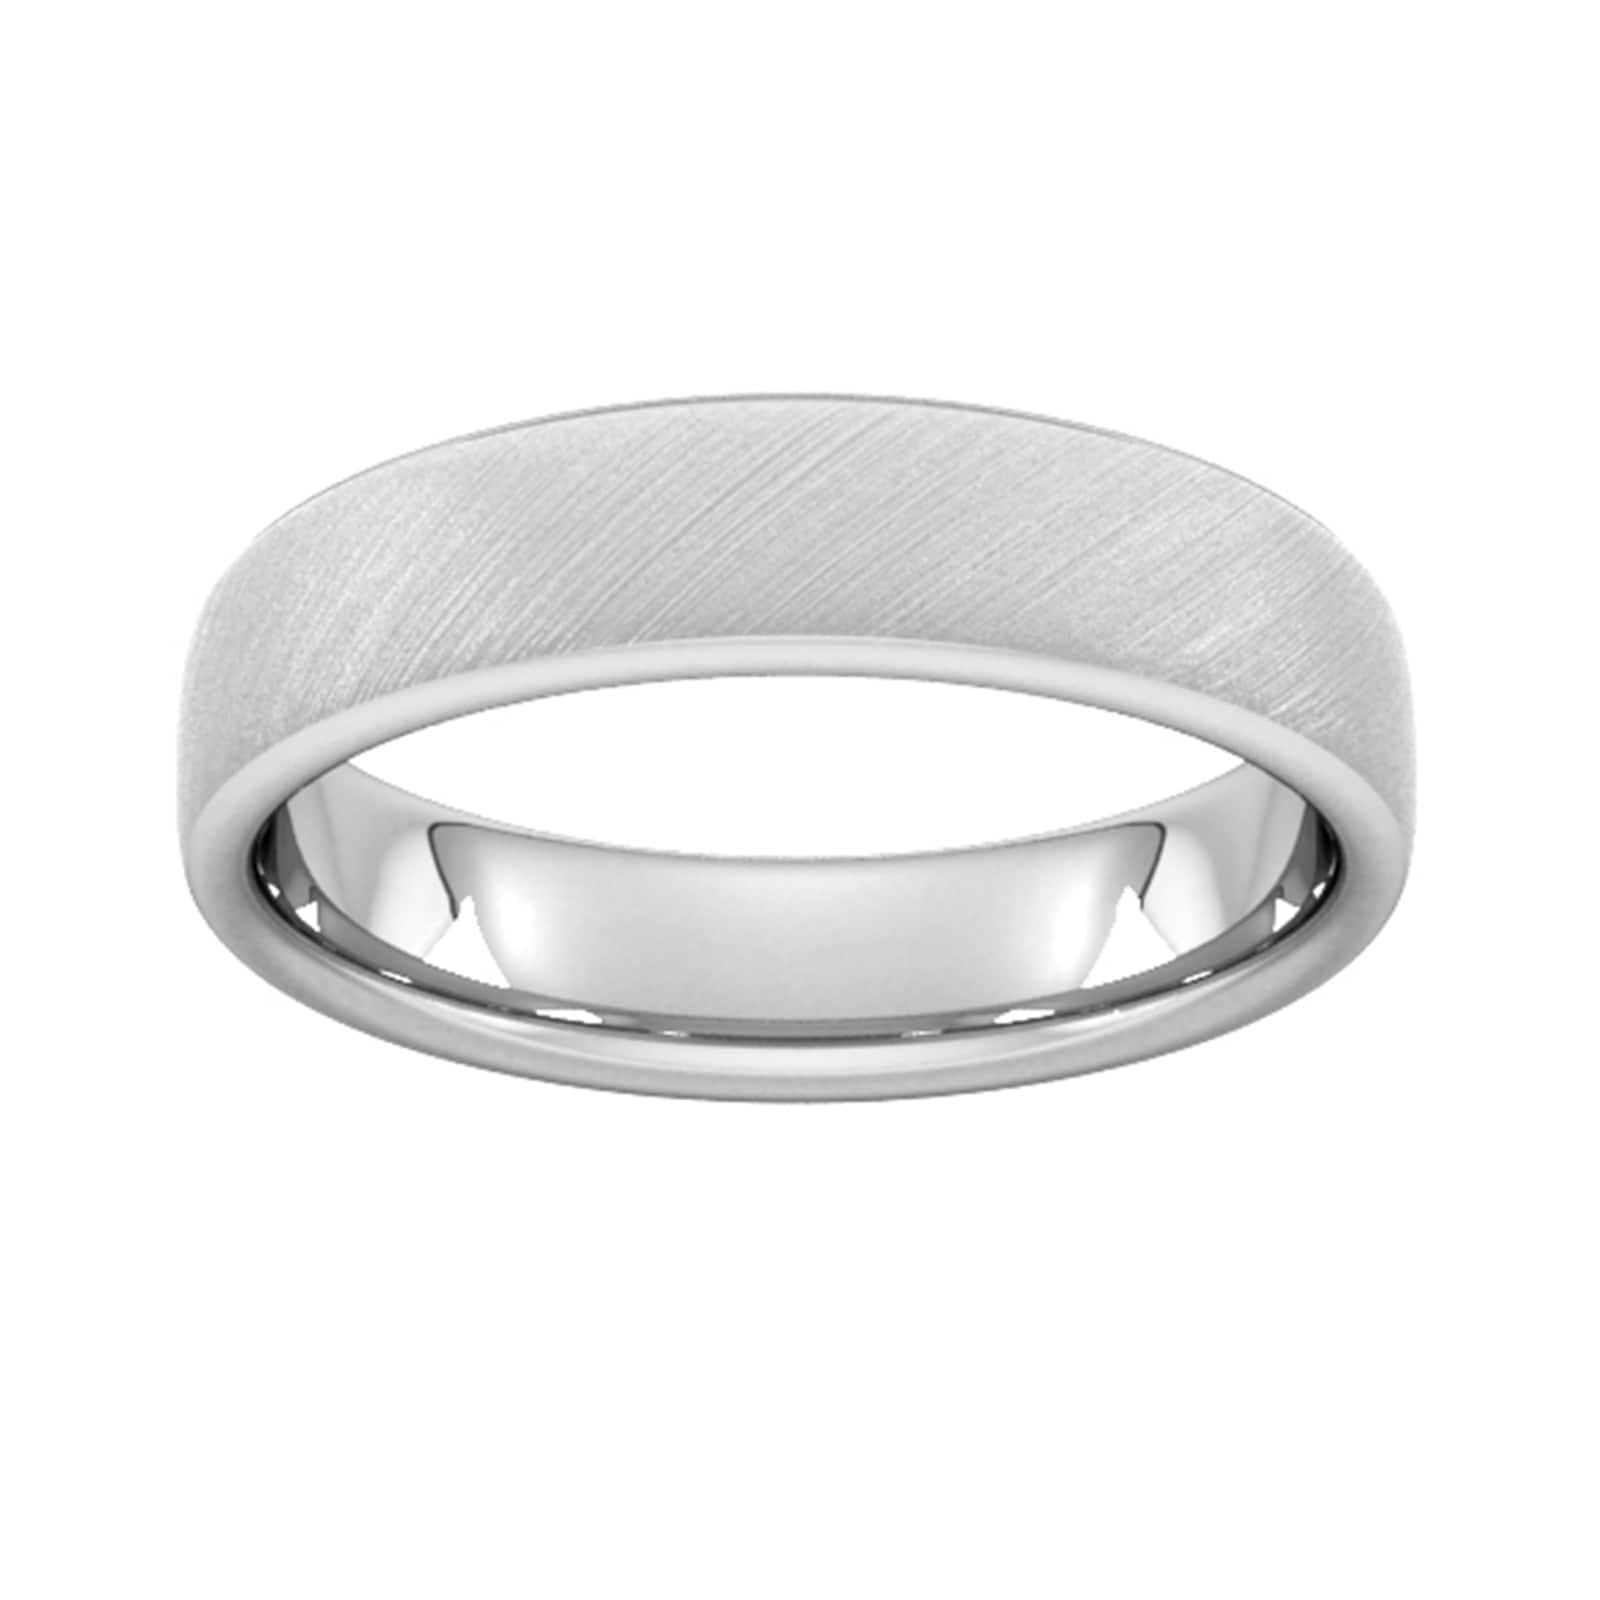 5mm Slight Court Standard Diagonal Matt Finish Wedding Ring In 18 Carat White Gold - Ring Size Q